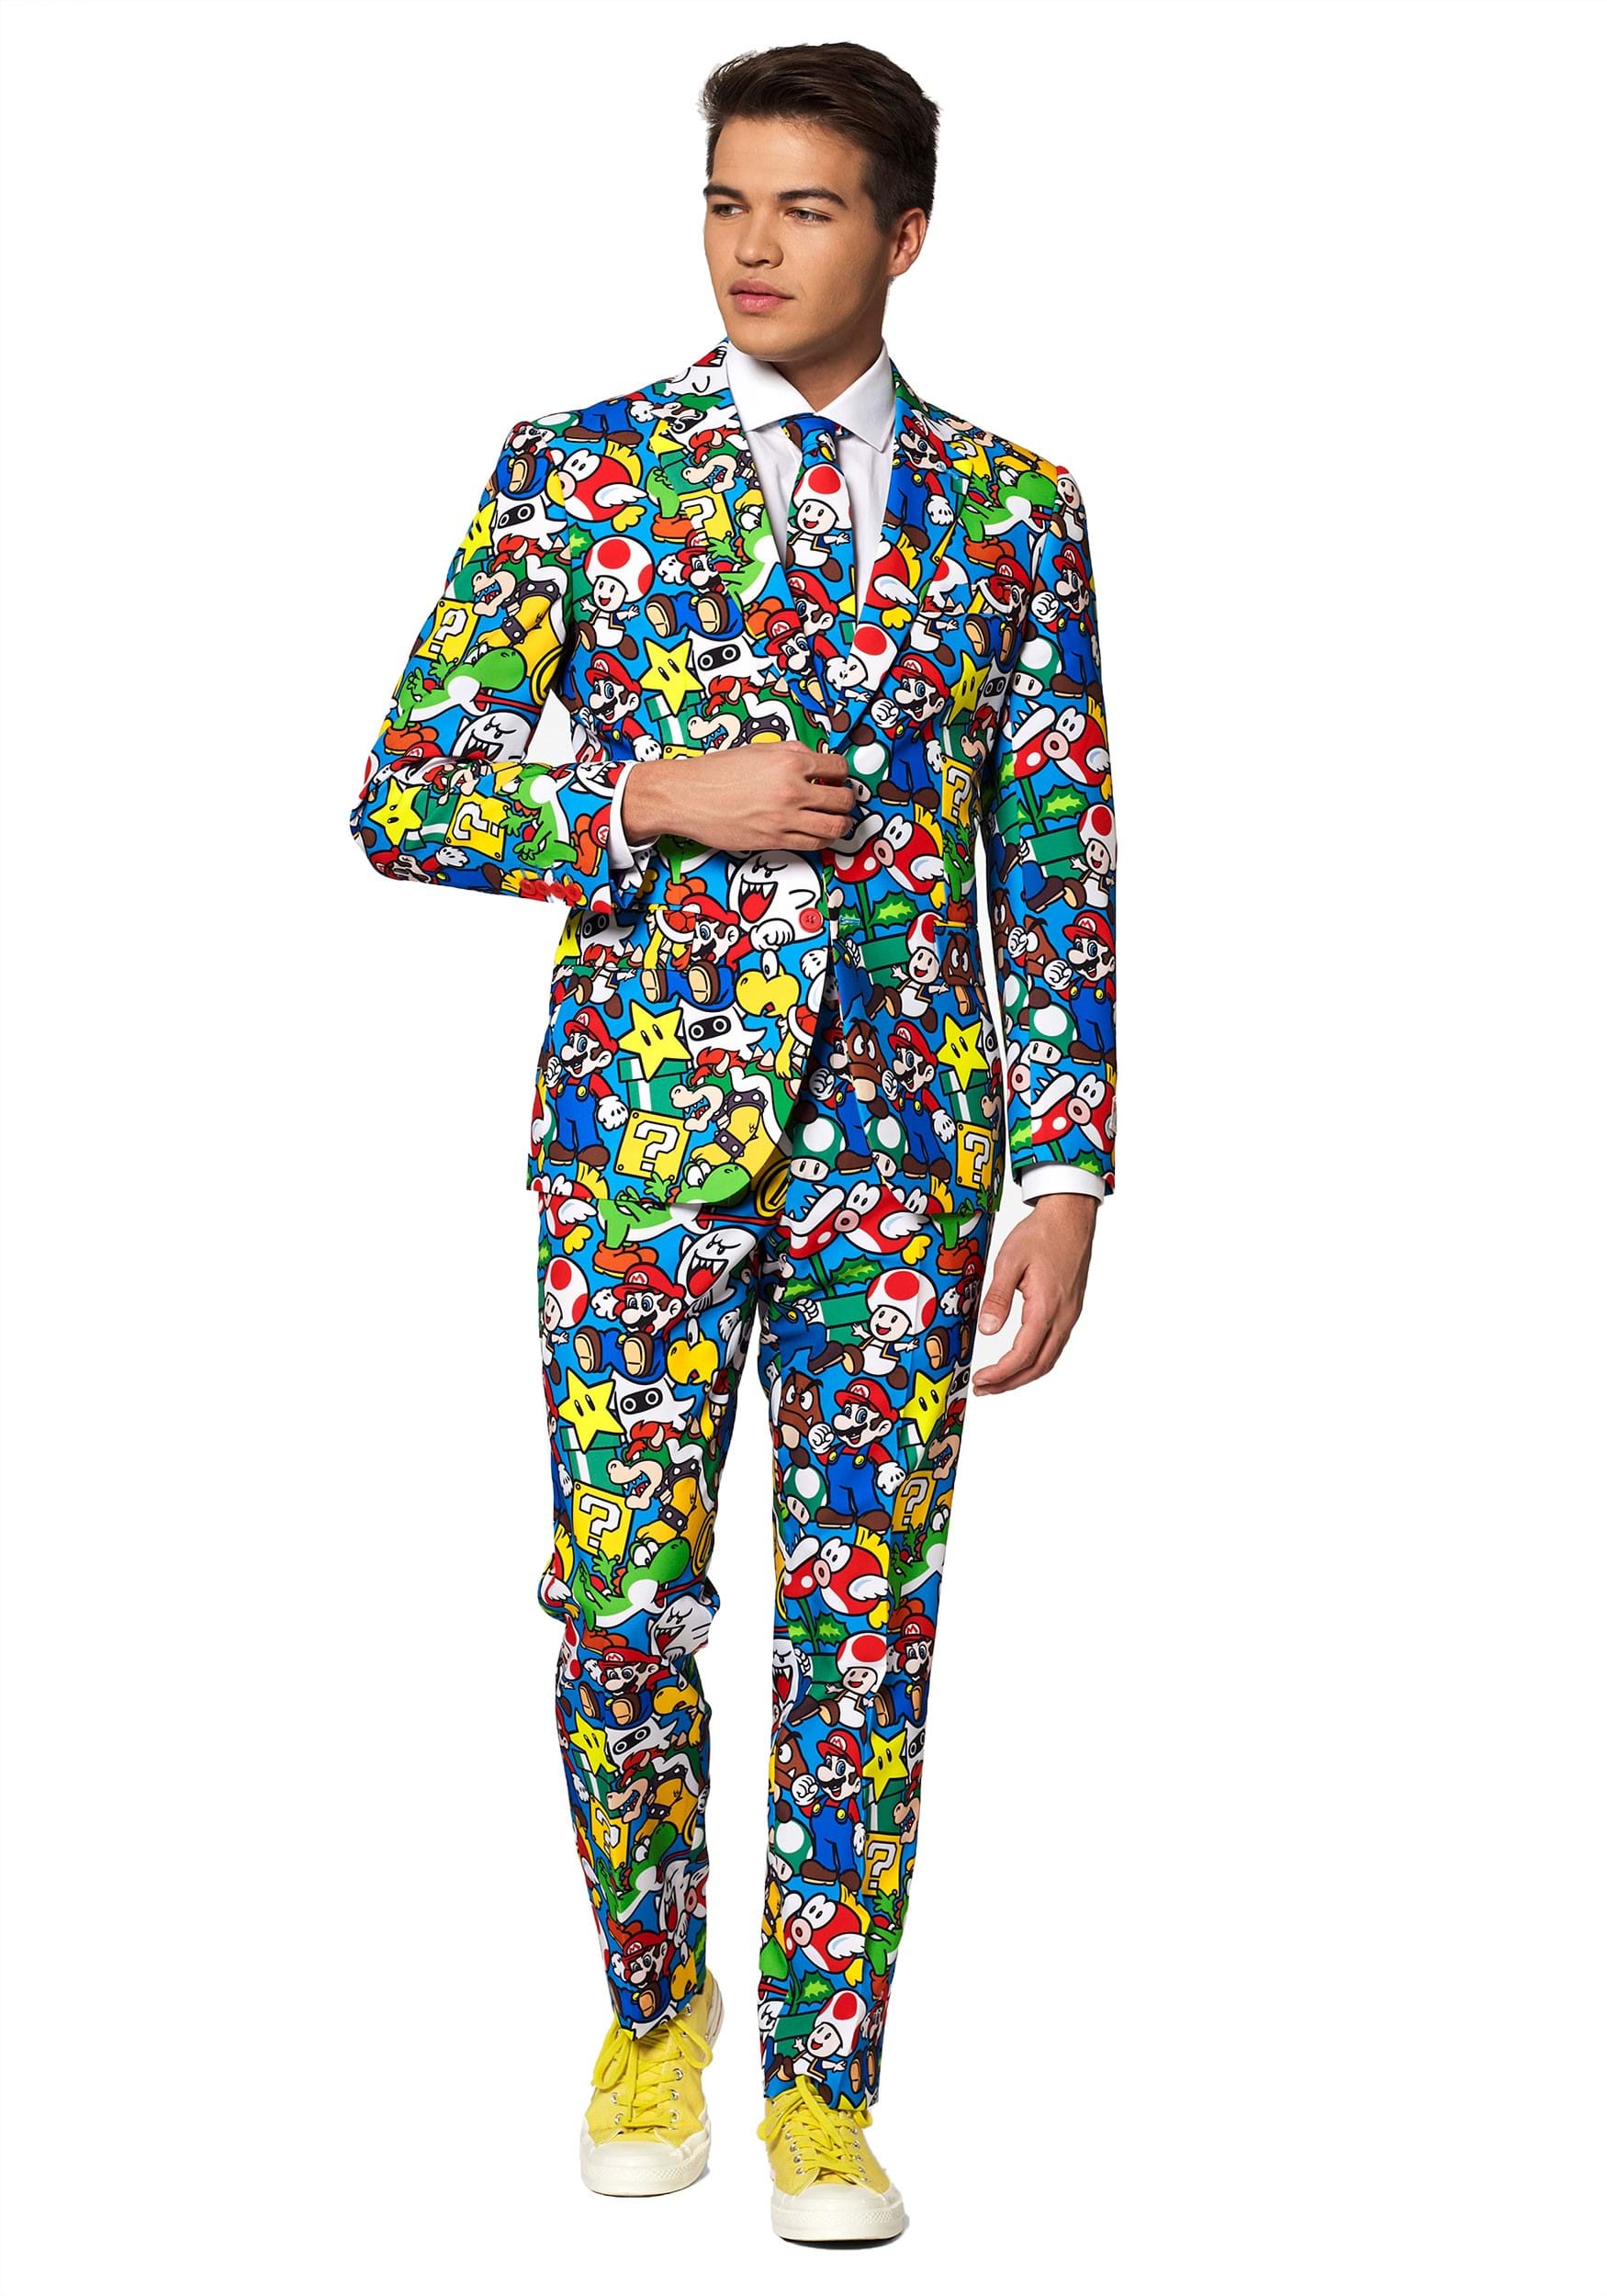 Image of Opposuit Super Mario Suit for Men ID OSOSUI-0105-46